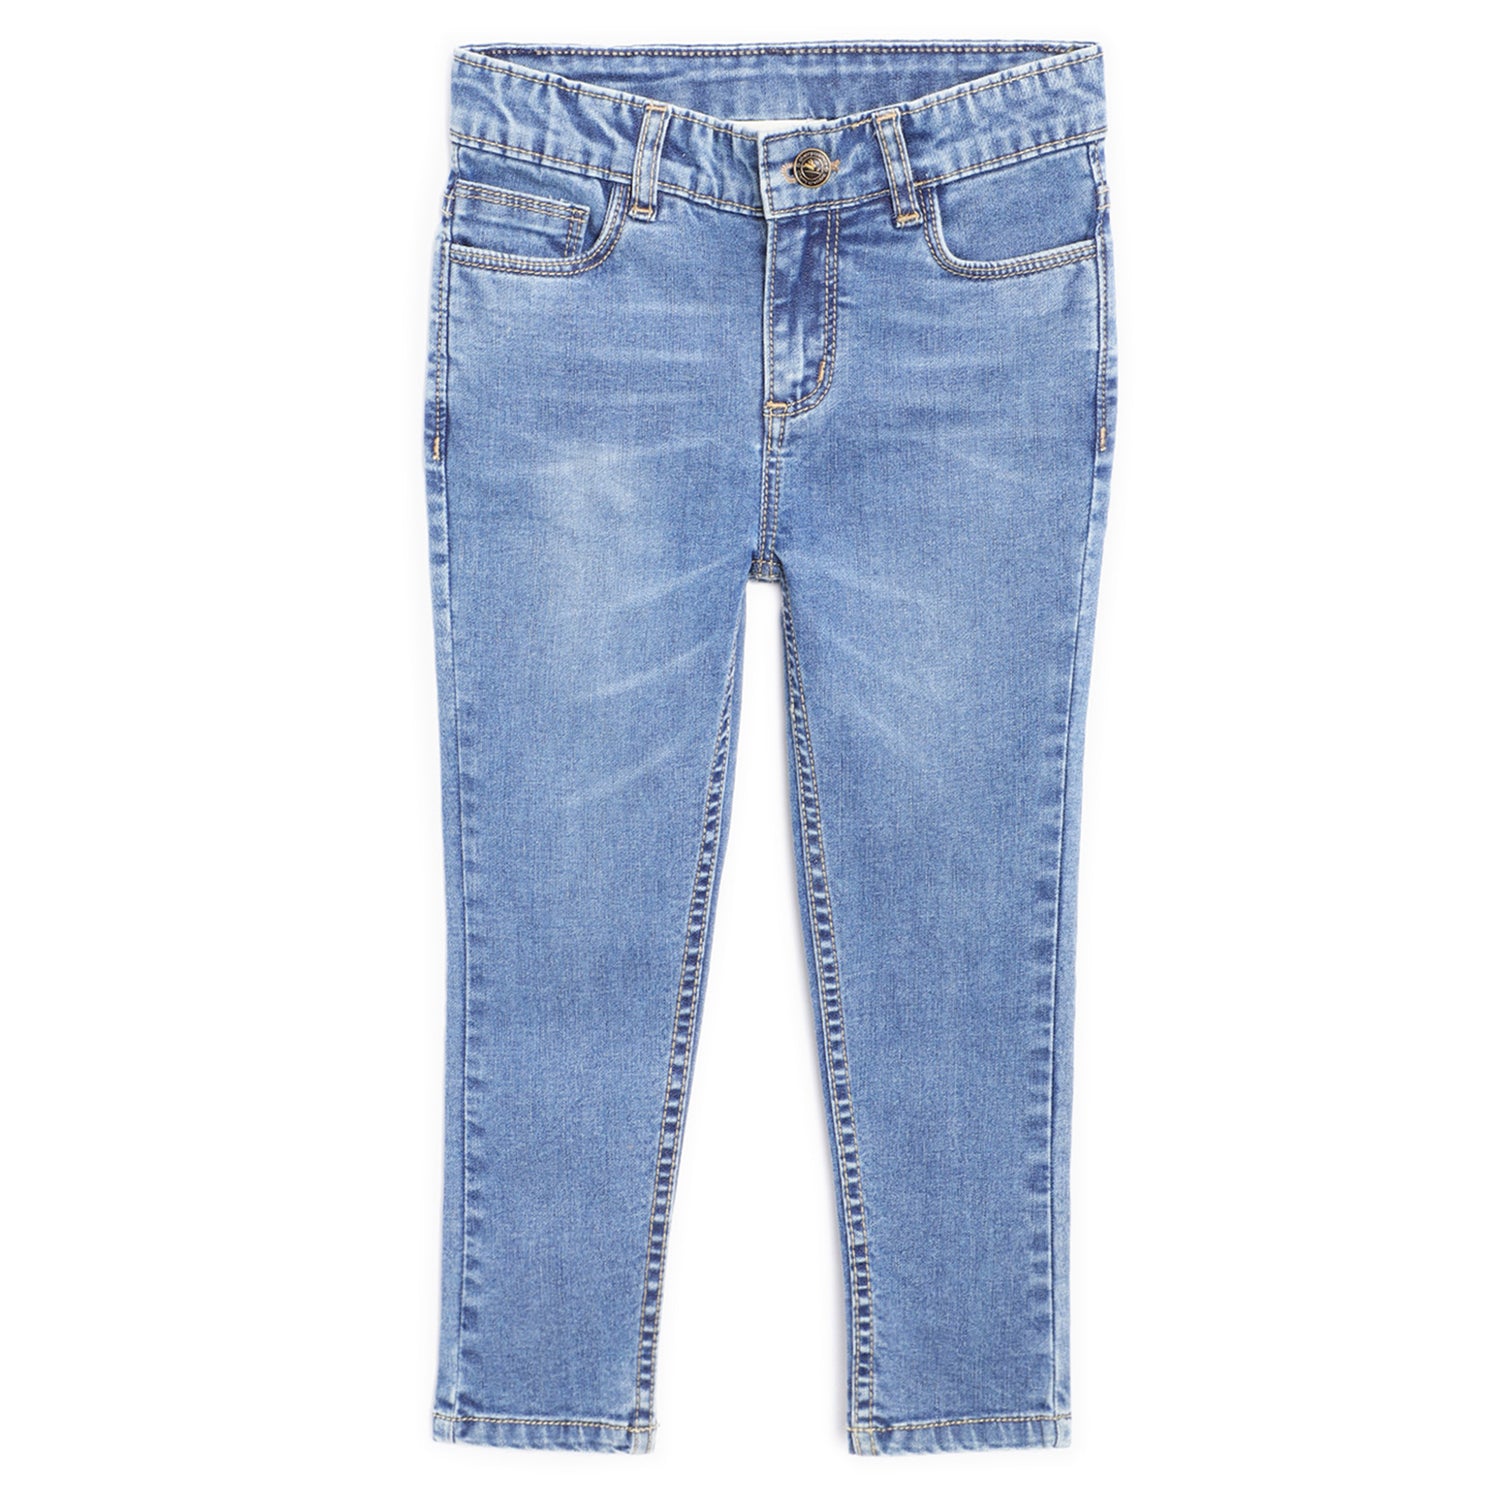 washed-indigo-denim-jeans-ws-dtrs-5439blu